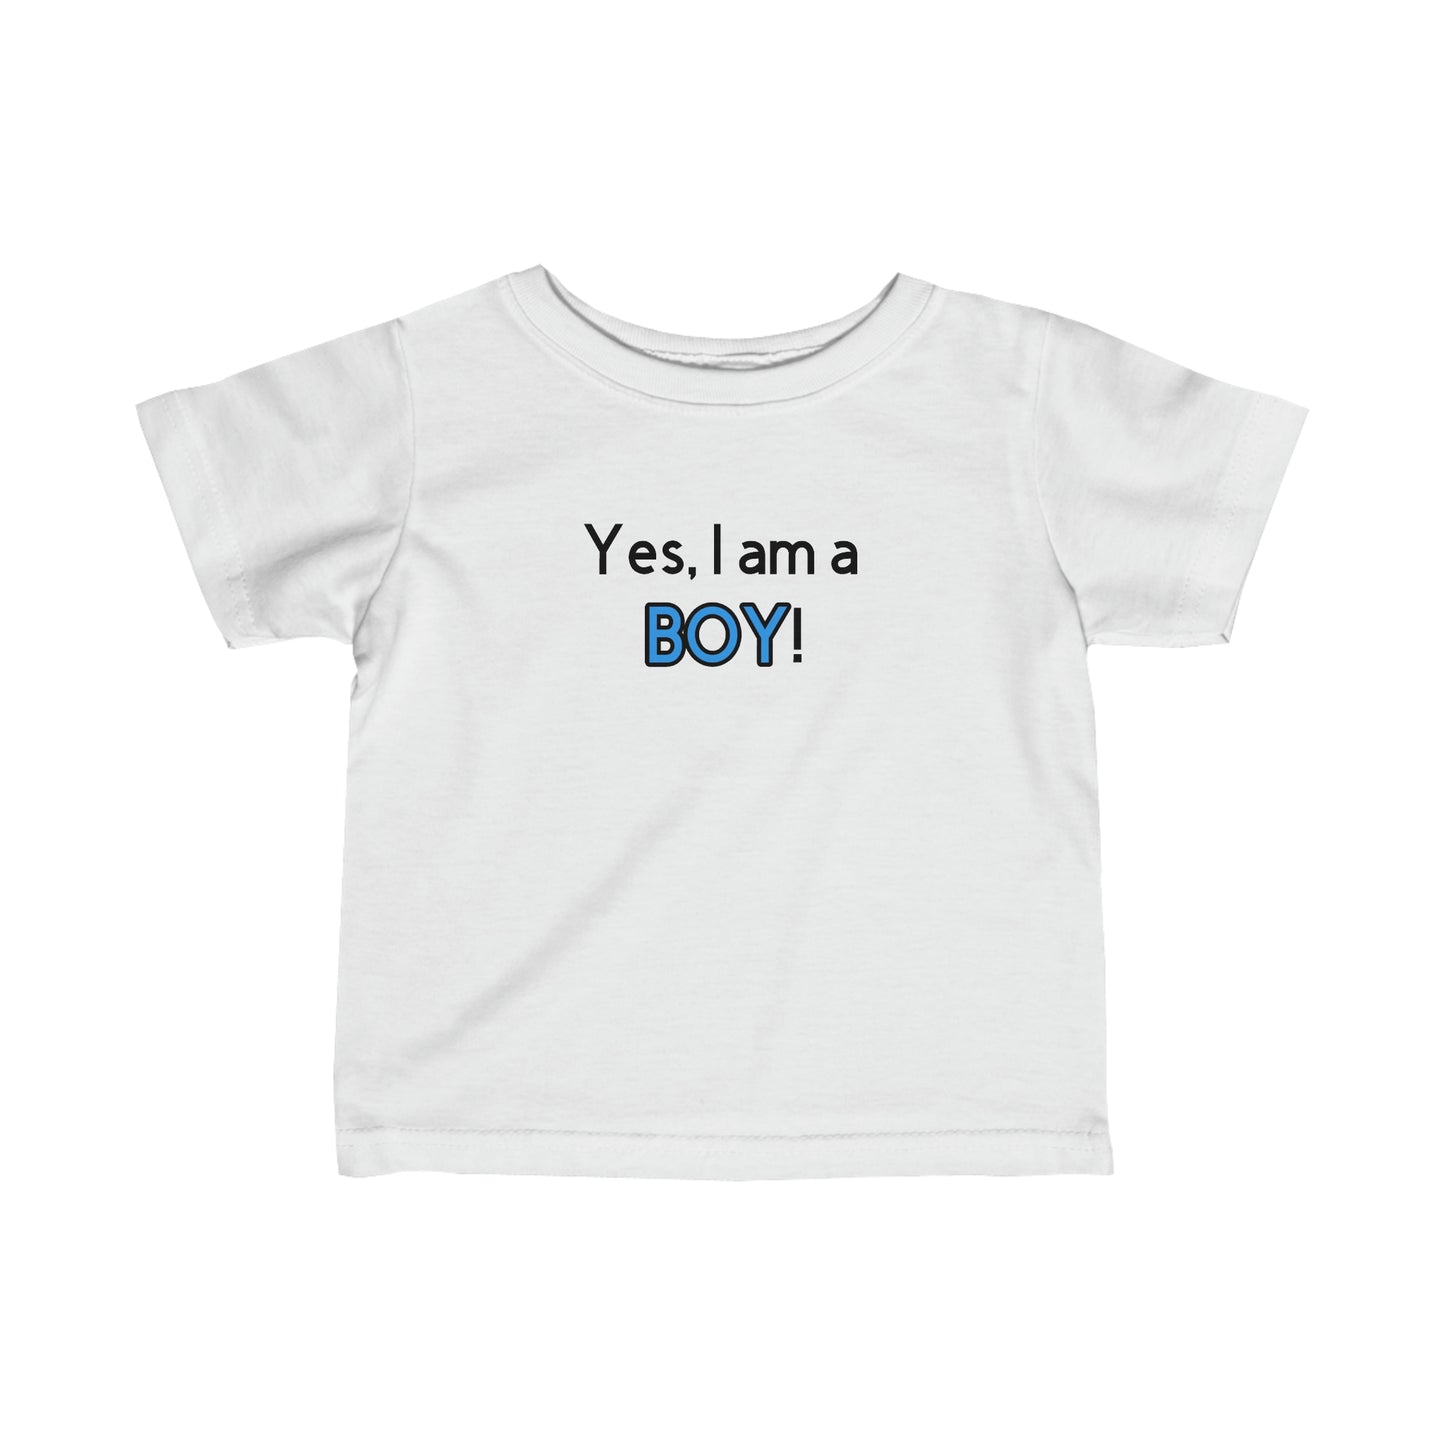 Yes, I am a BOY! Infant Tee